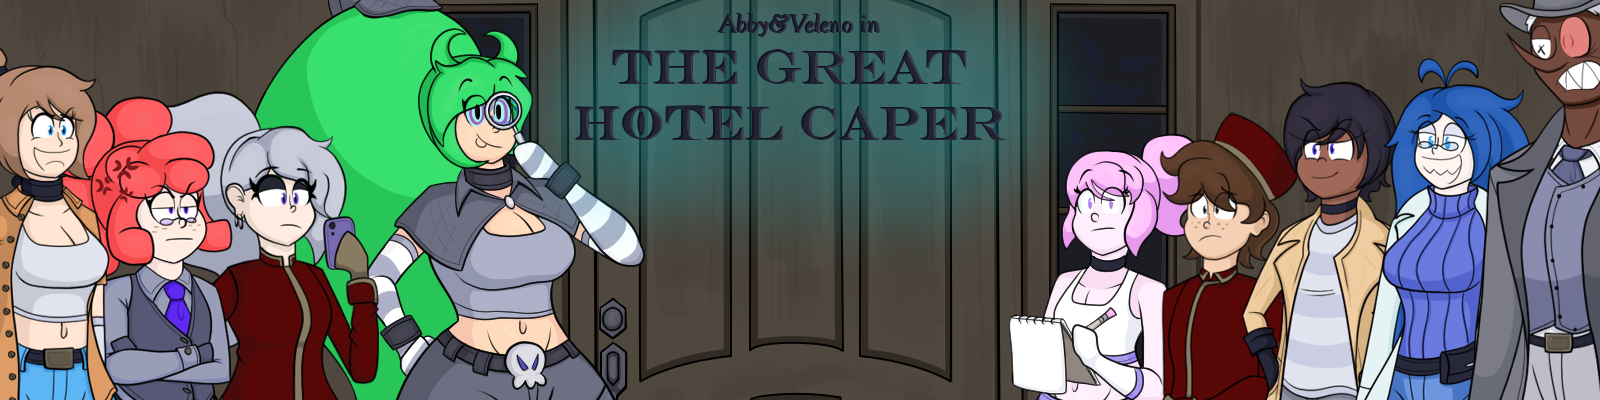 Abby & Veleno in The Great Hotel Caper poster